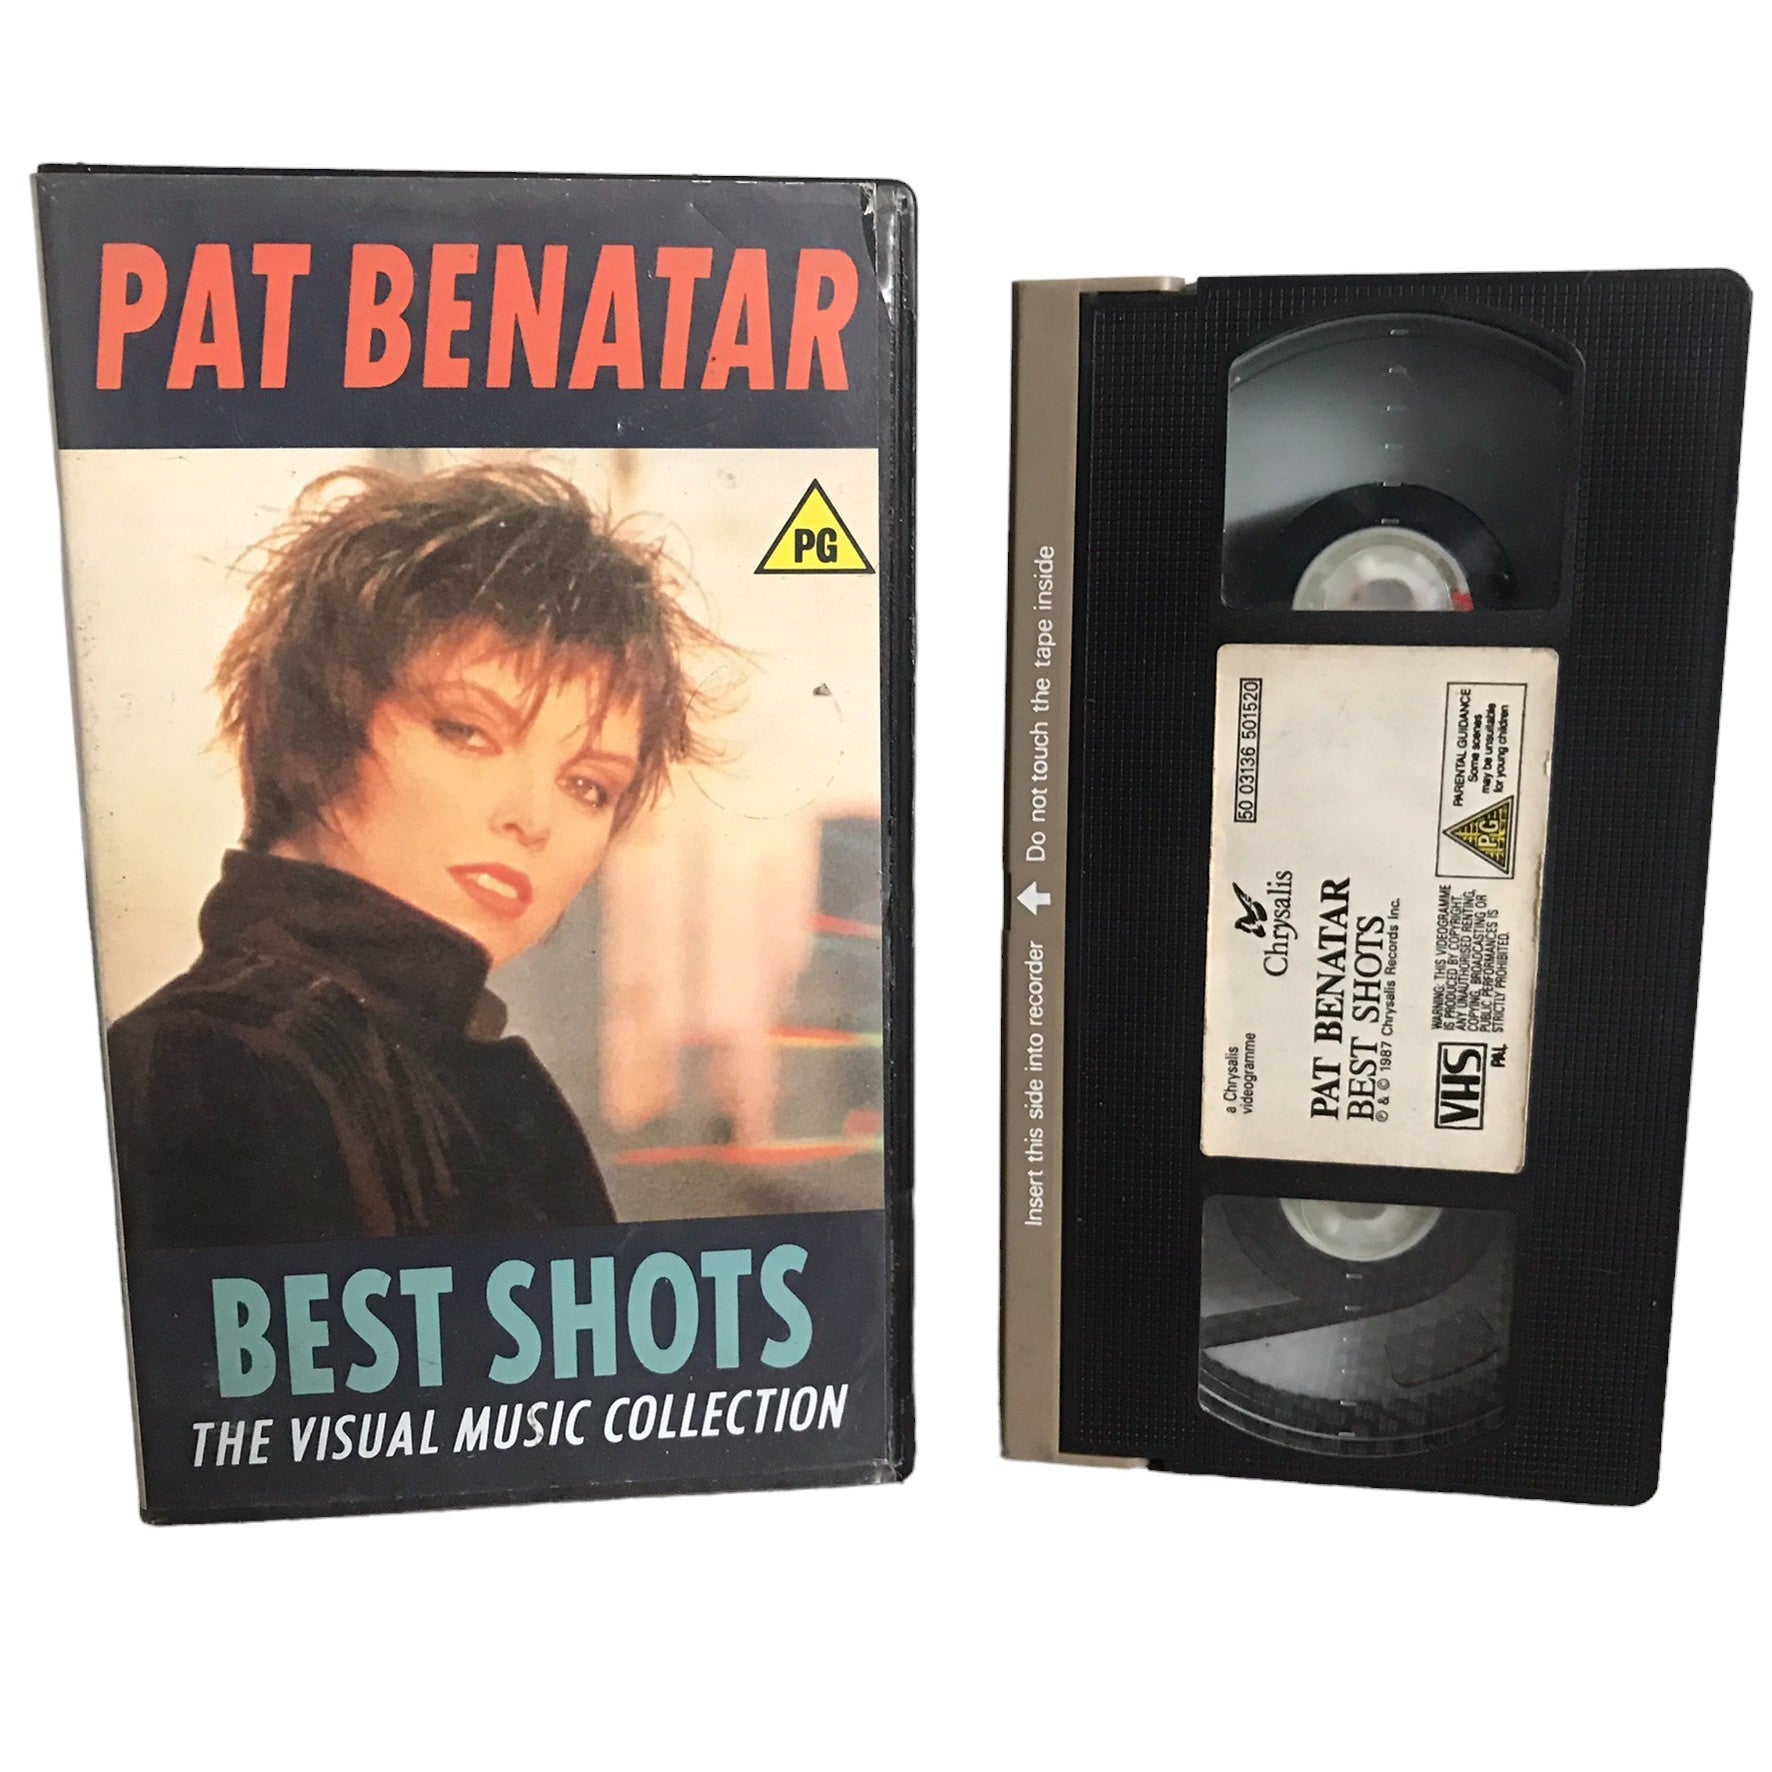 Pat Benatar Best Shots - Michael Peters - Chrysalis videogramme - Music - Pal - VHS-